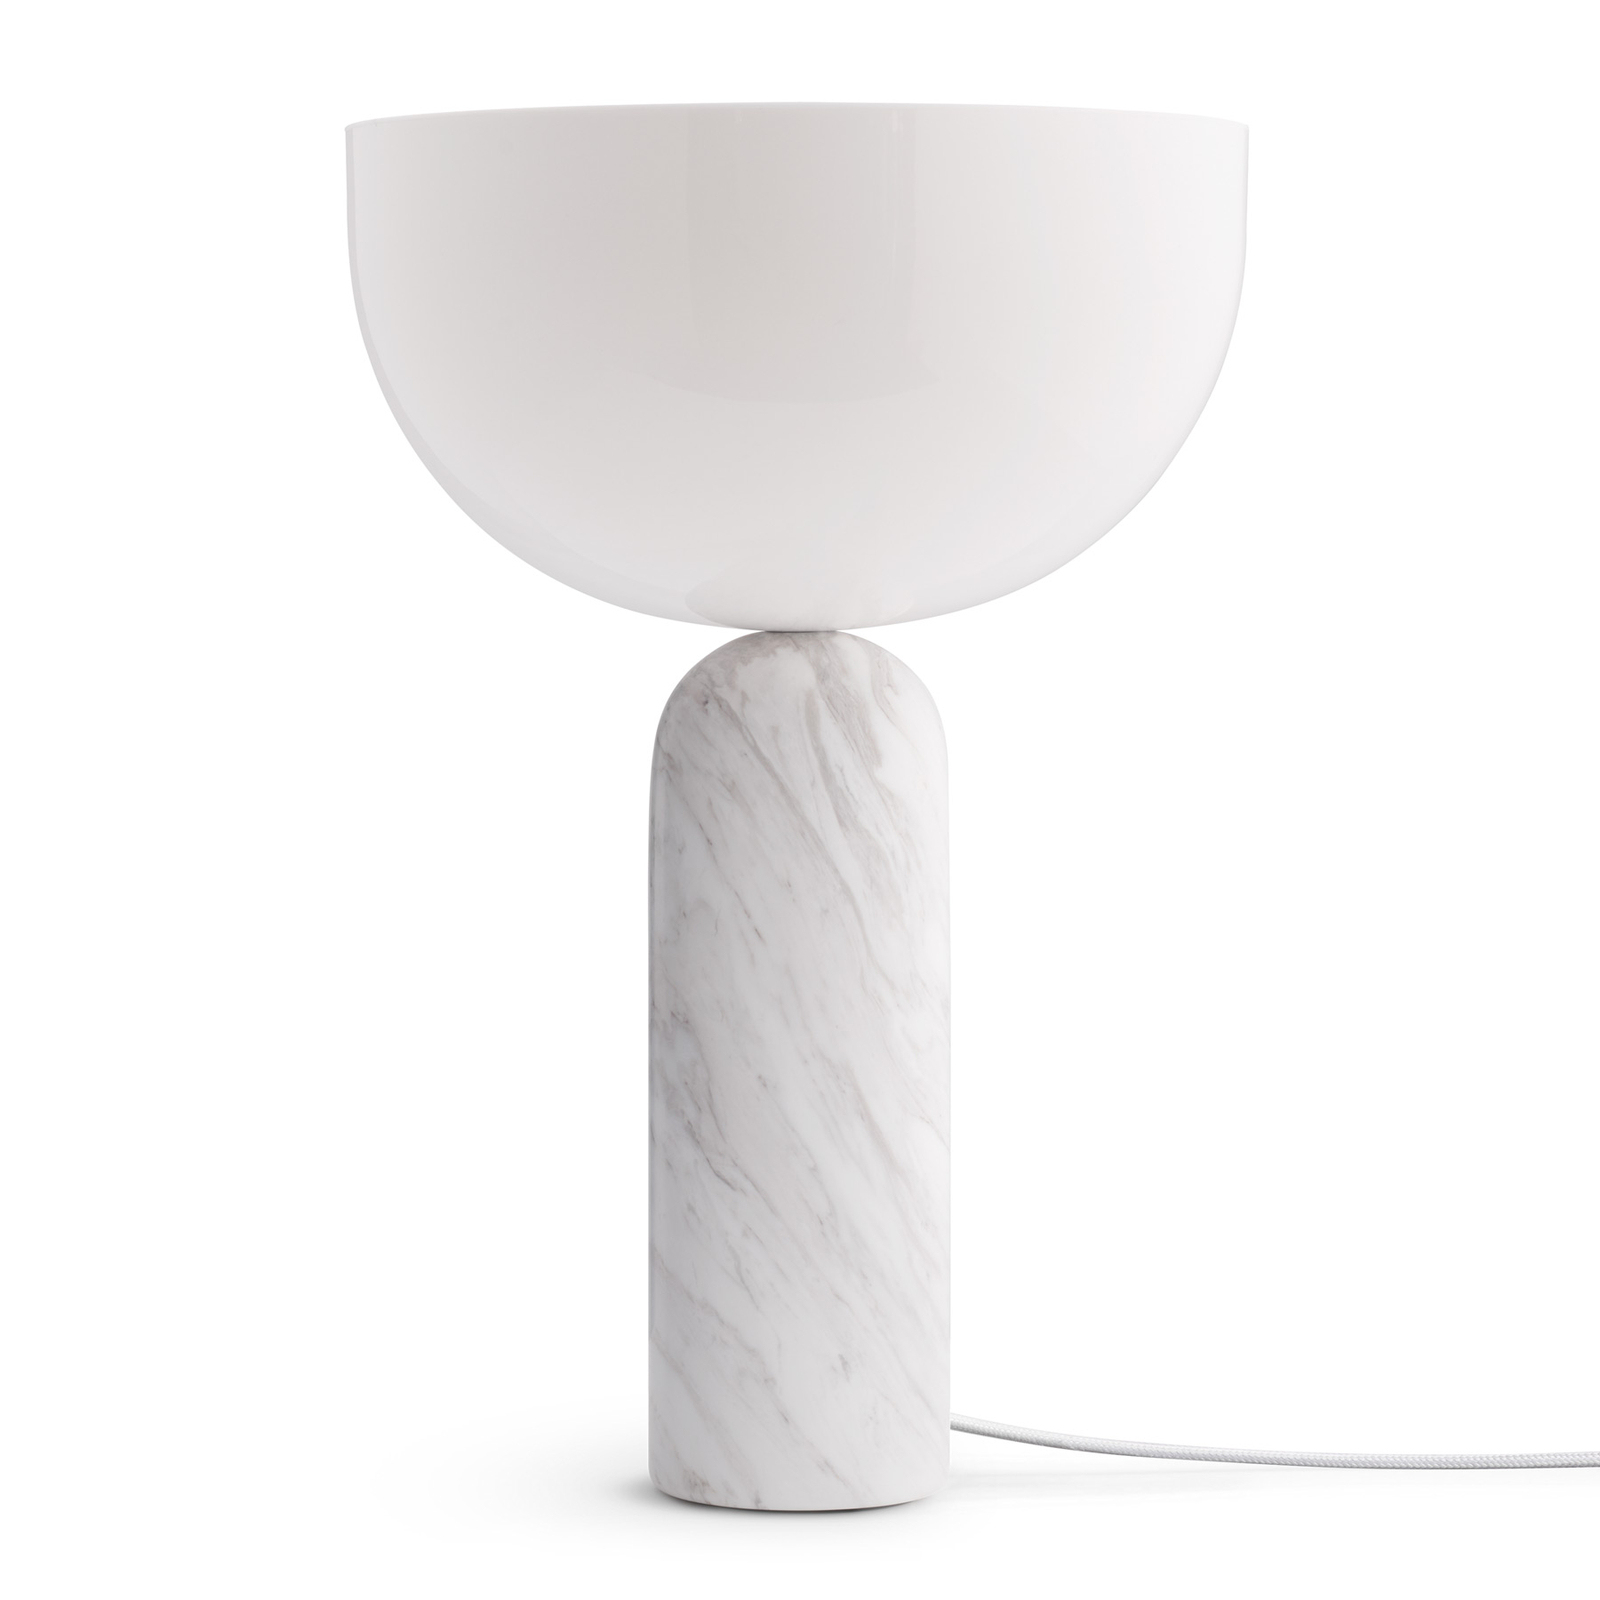 New Works Kizu Large lámpara de mesa, blanca